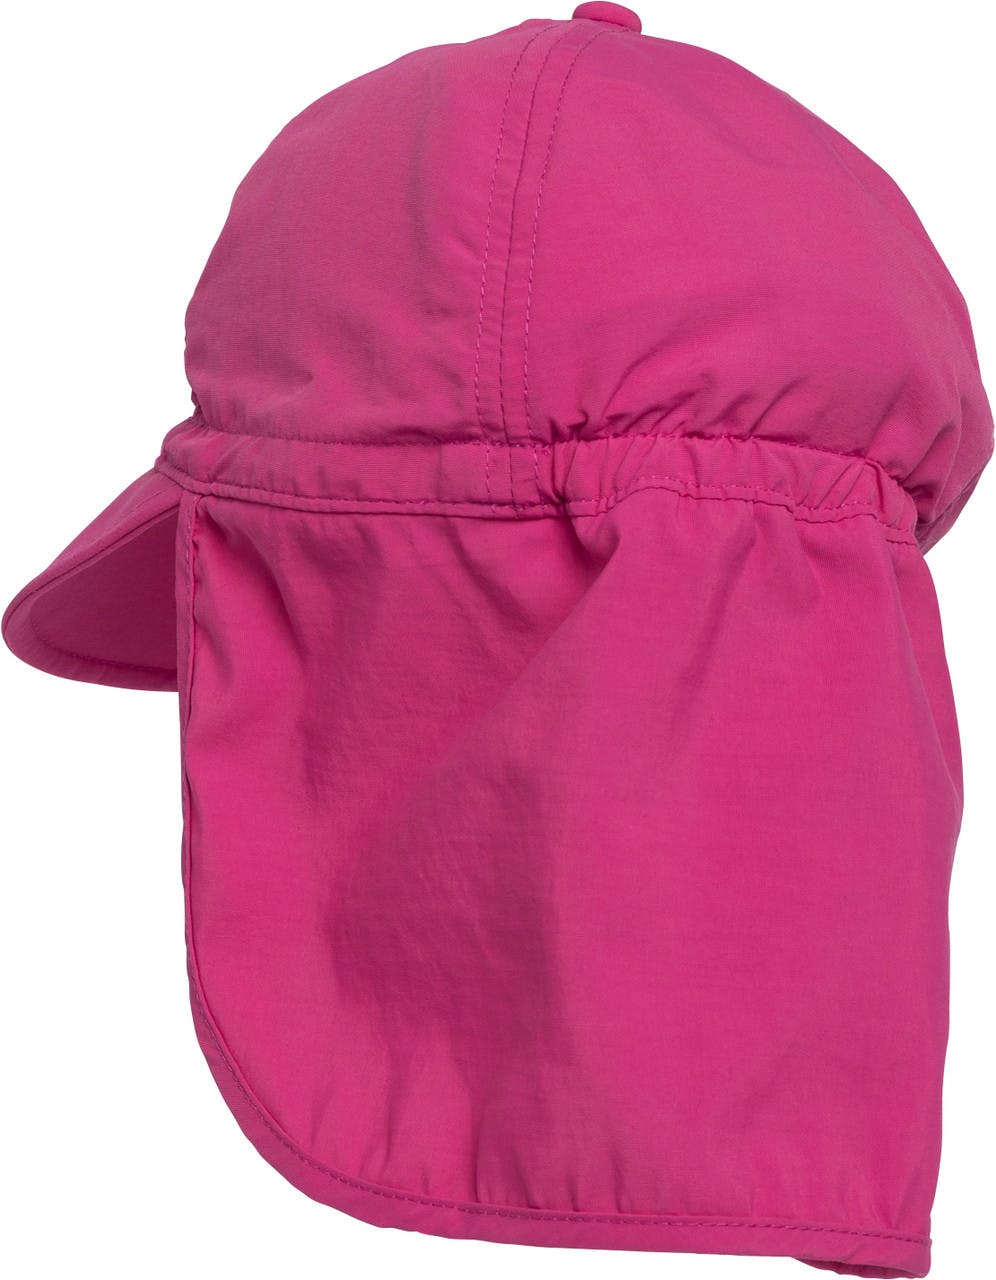 Sunnyday Surfari Sun Hat Passion Pink